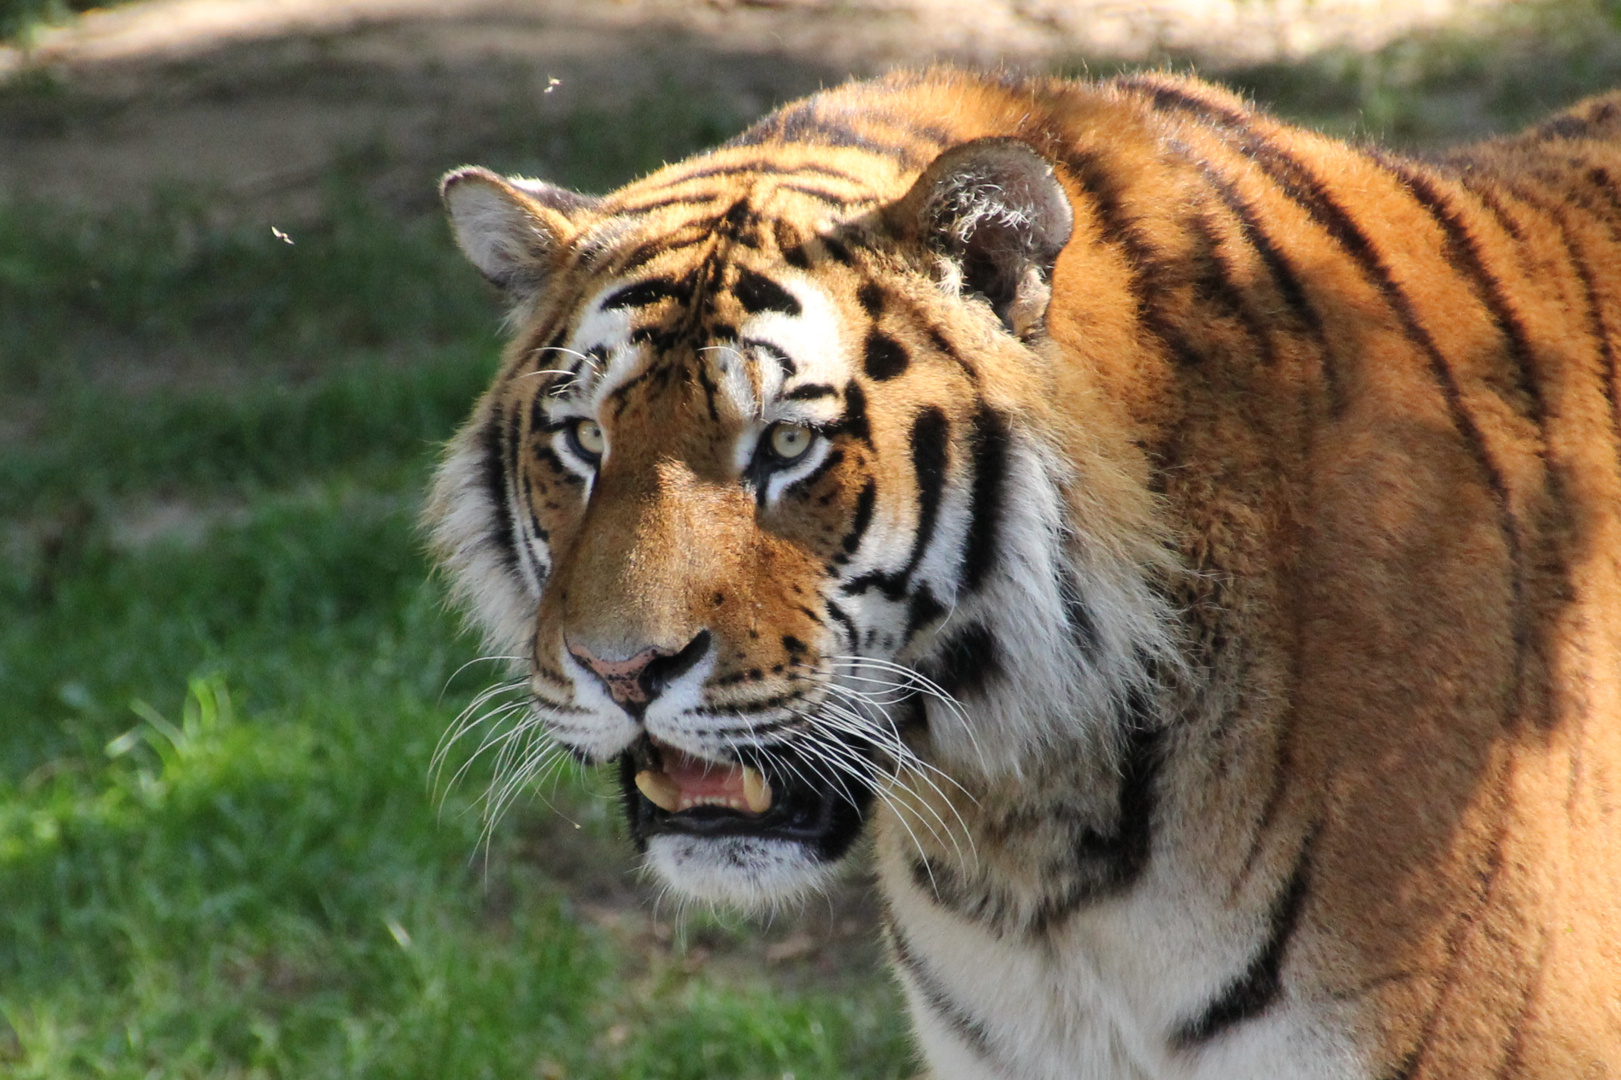 Tiger im Kölner Zoo